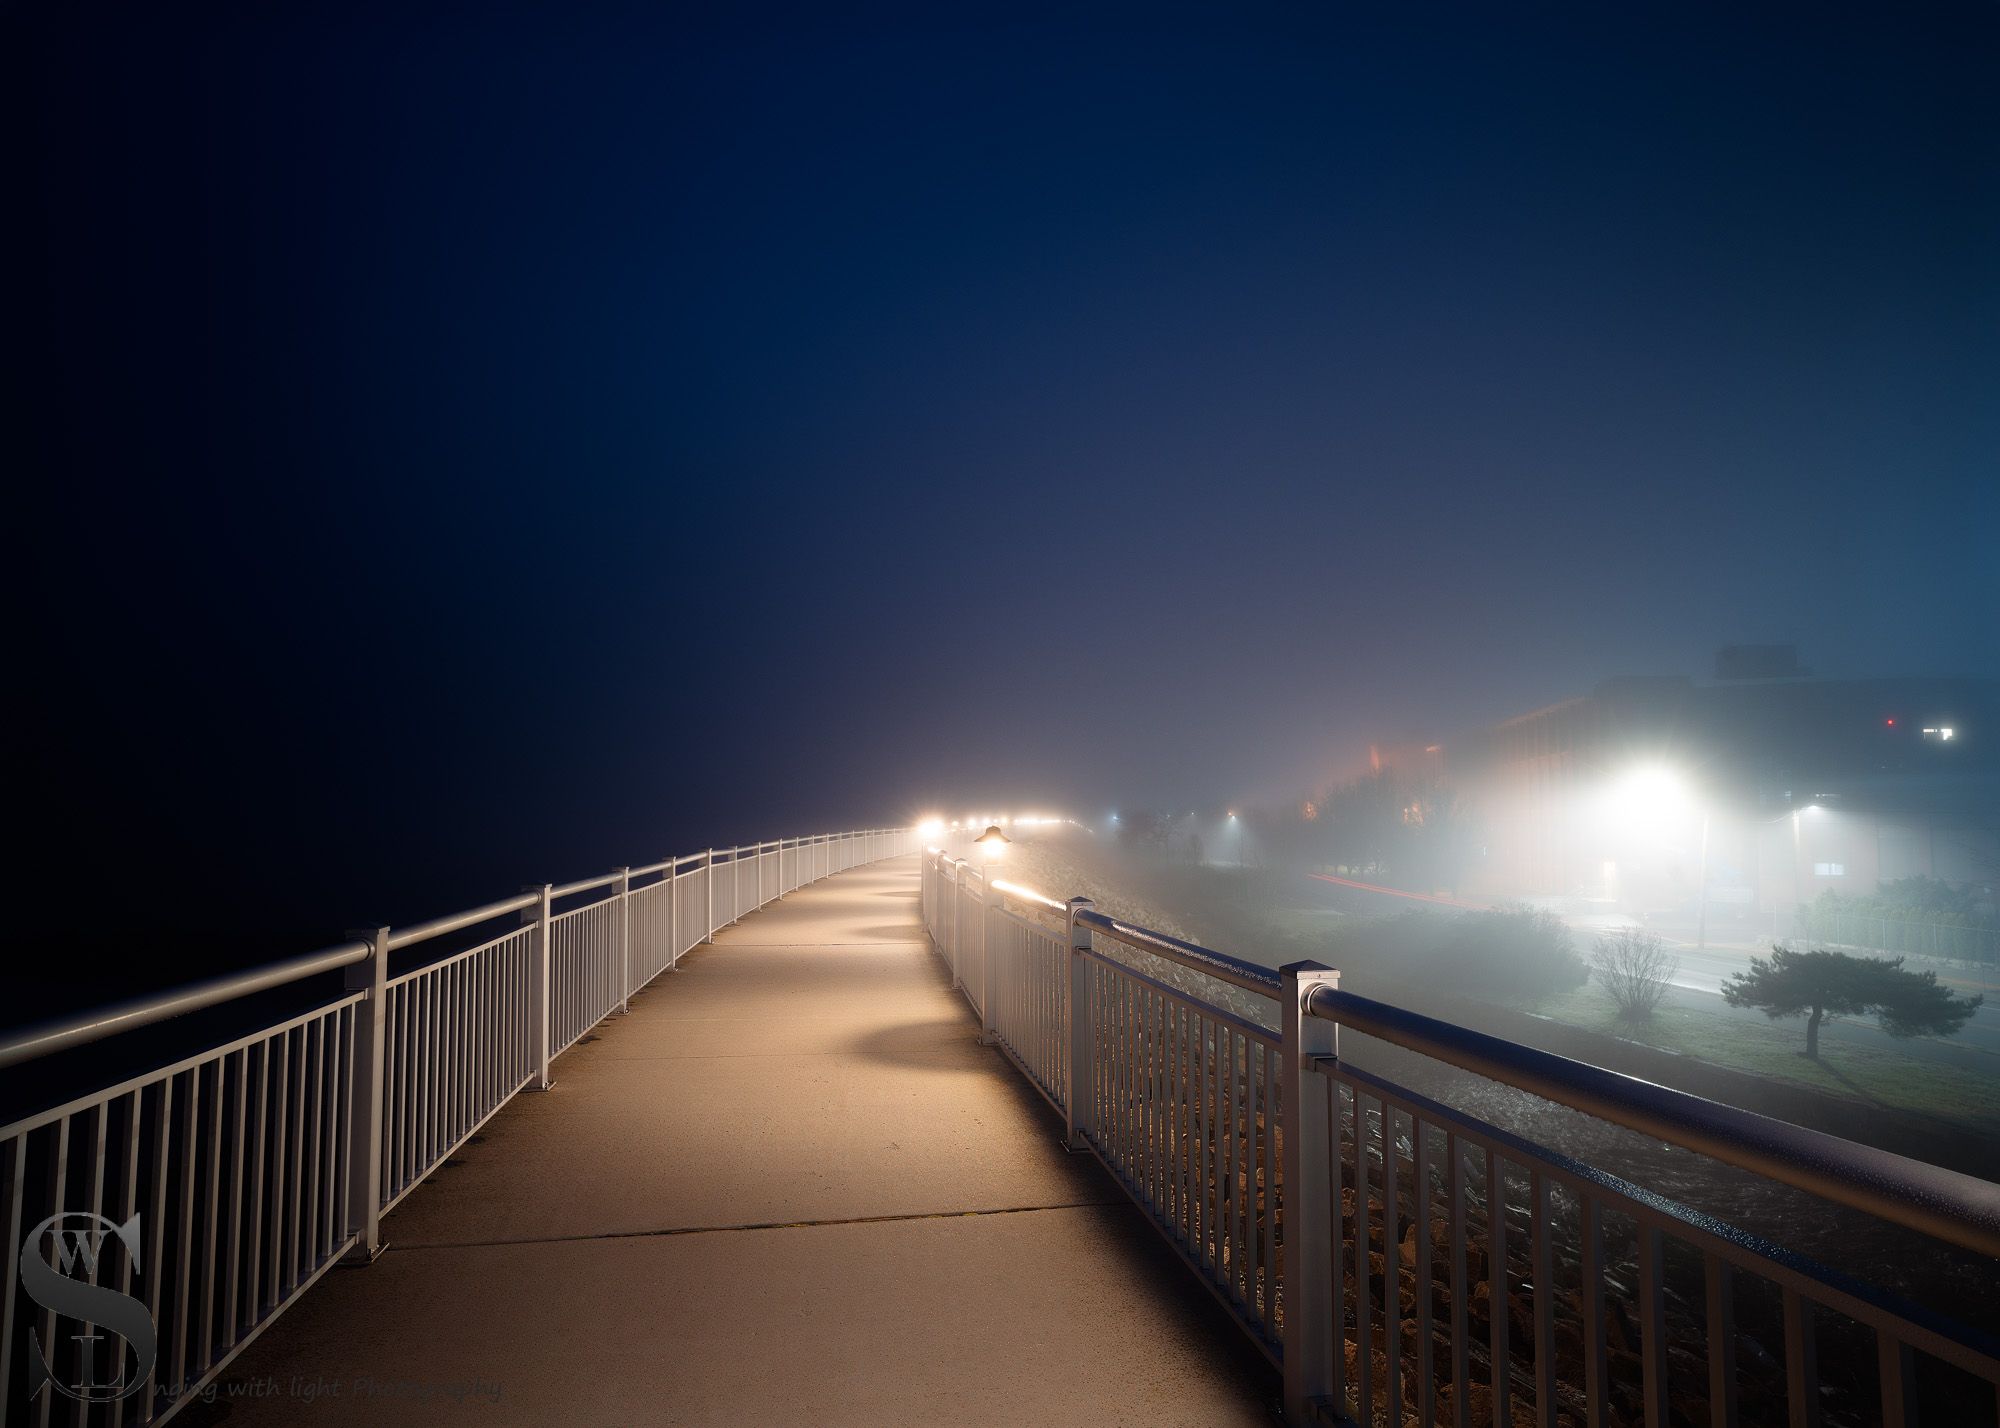 harbpr walk foggy-2.jpg